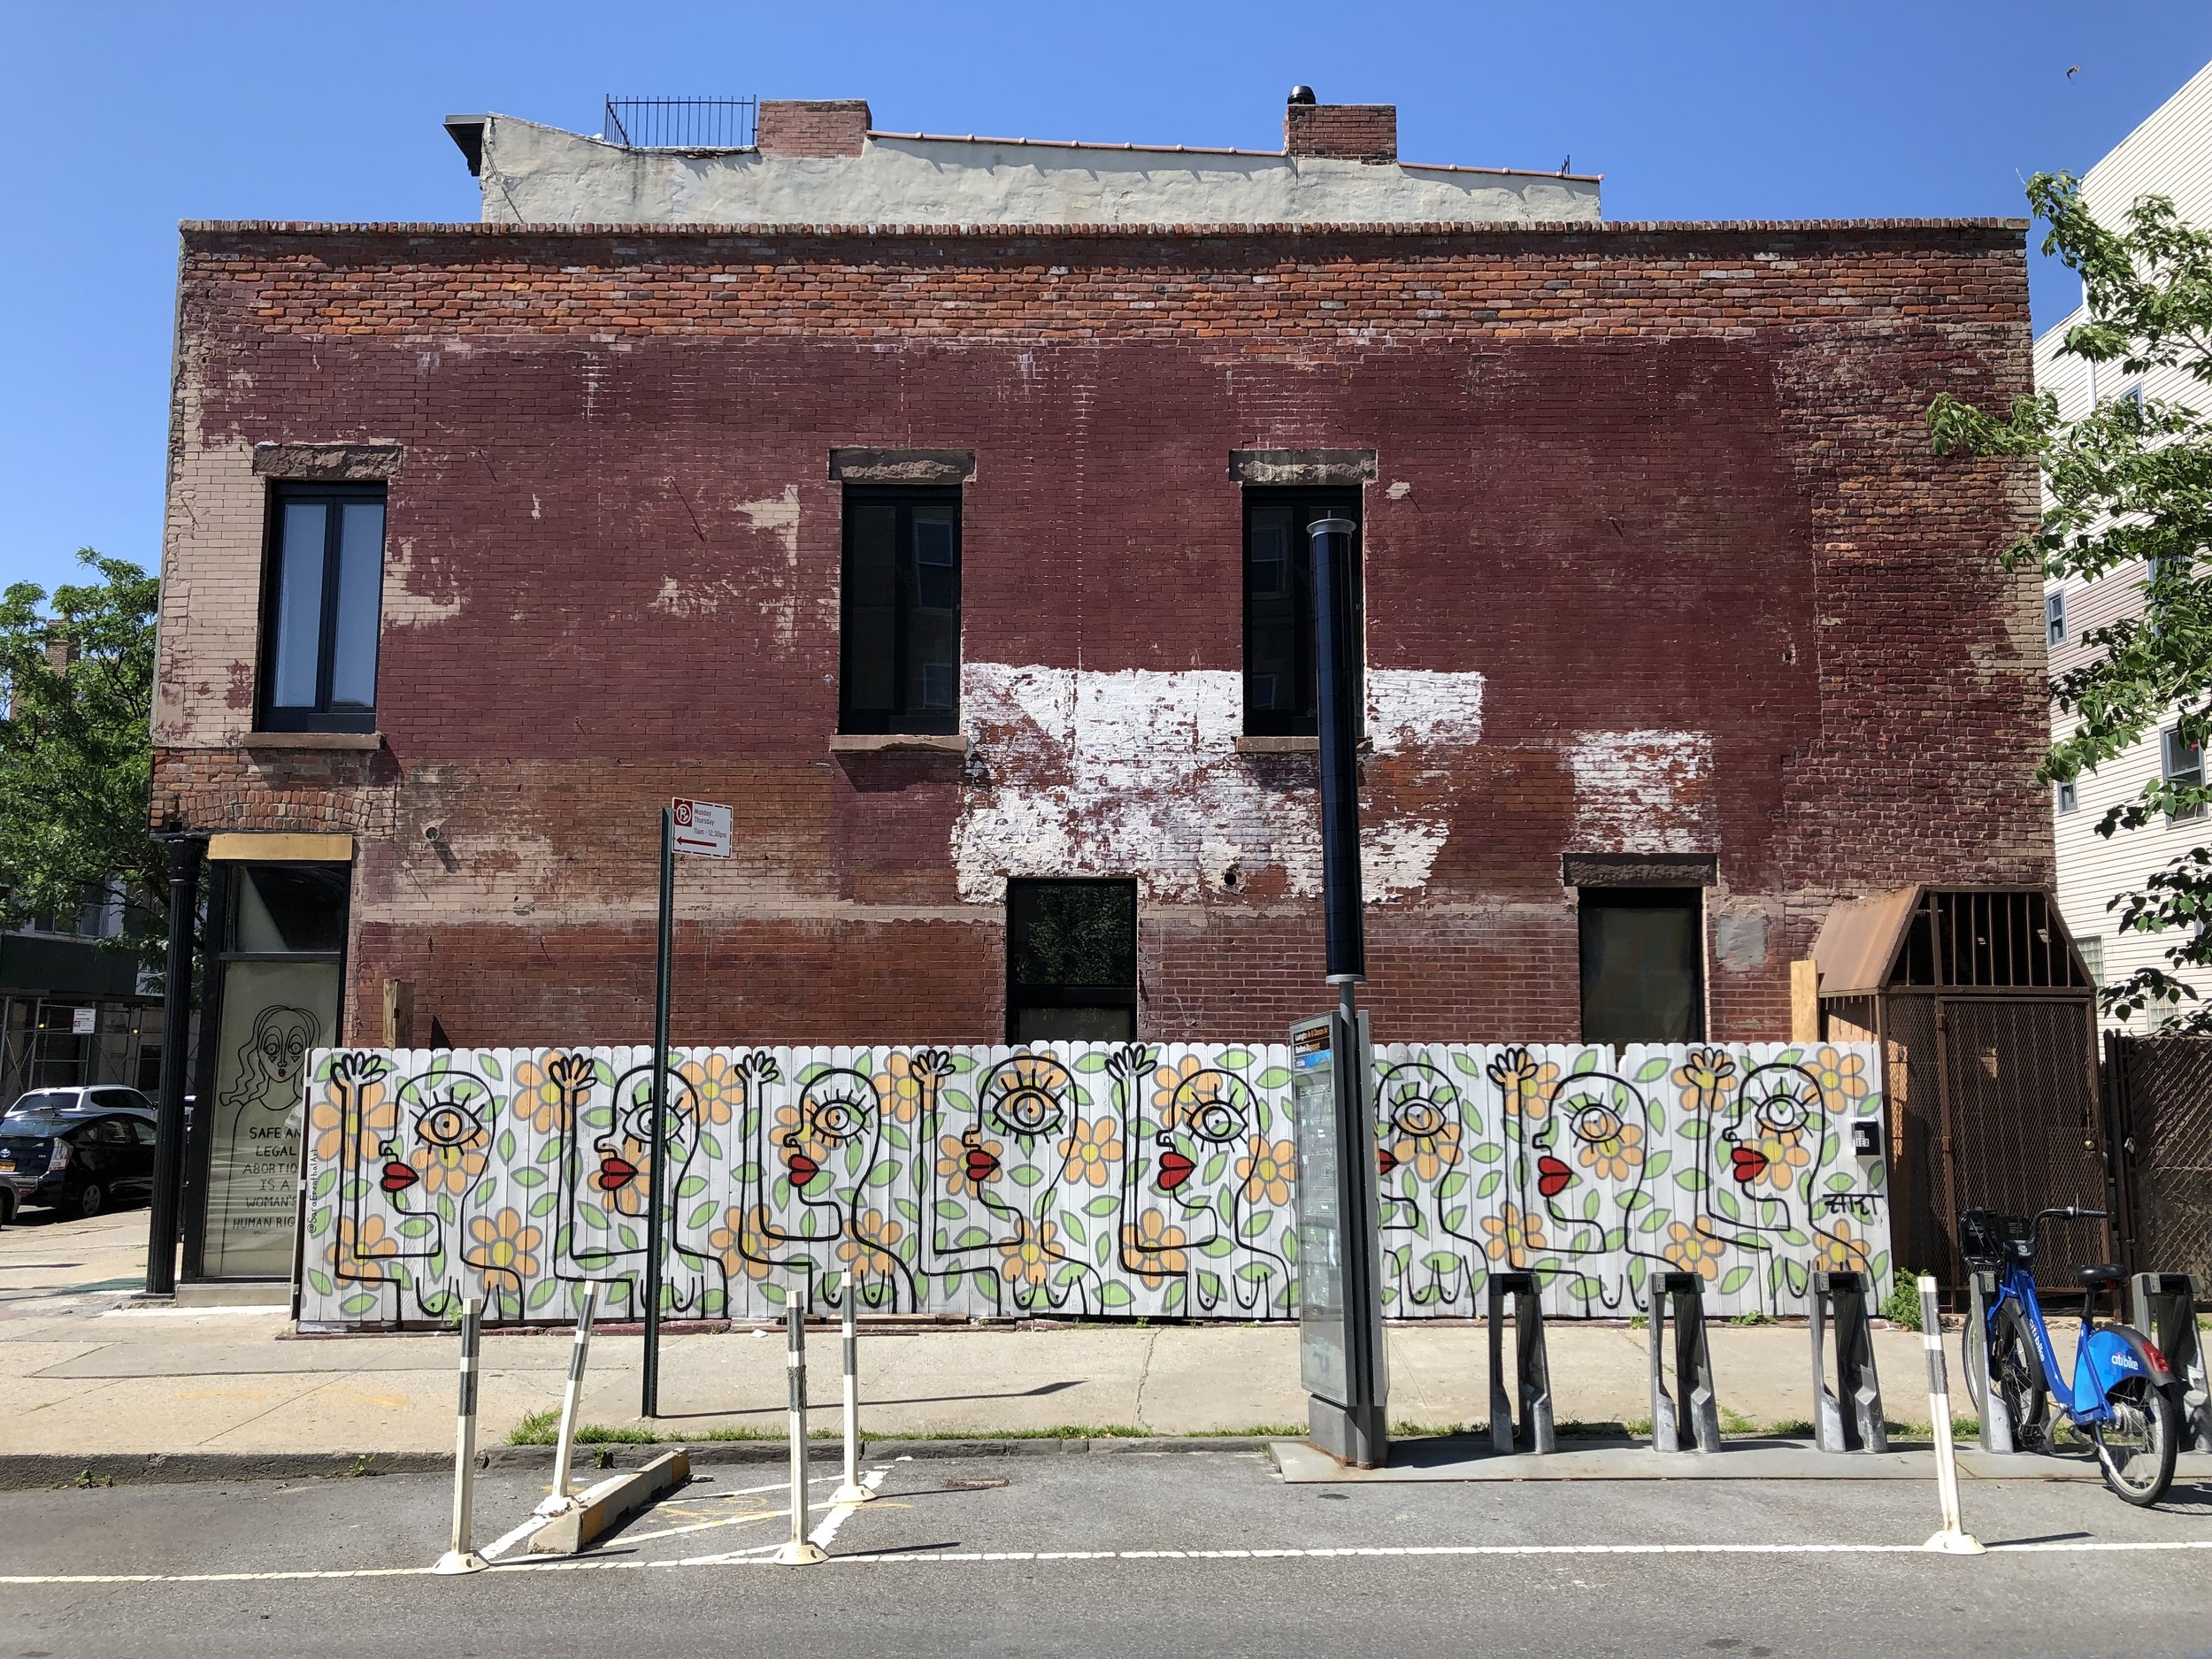  Fence Mural, Bedford Stuyvesant, Brooklyn NY  2019 